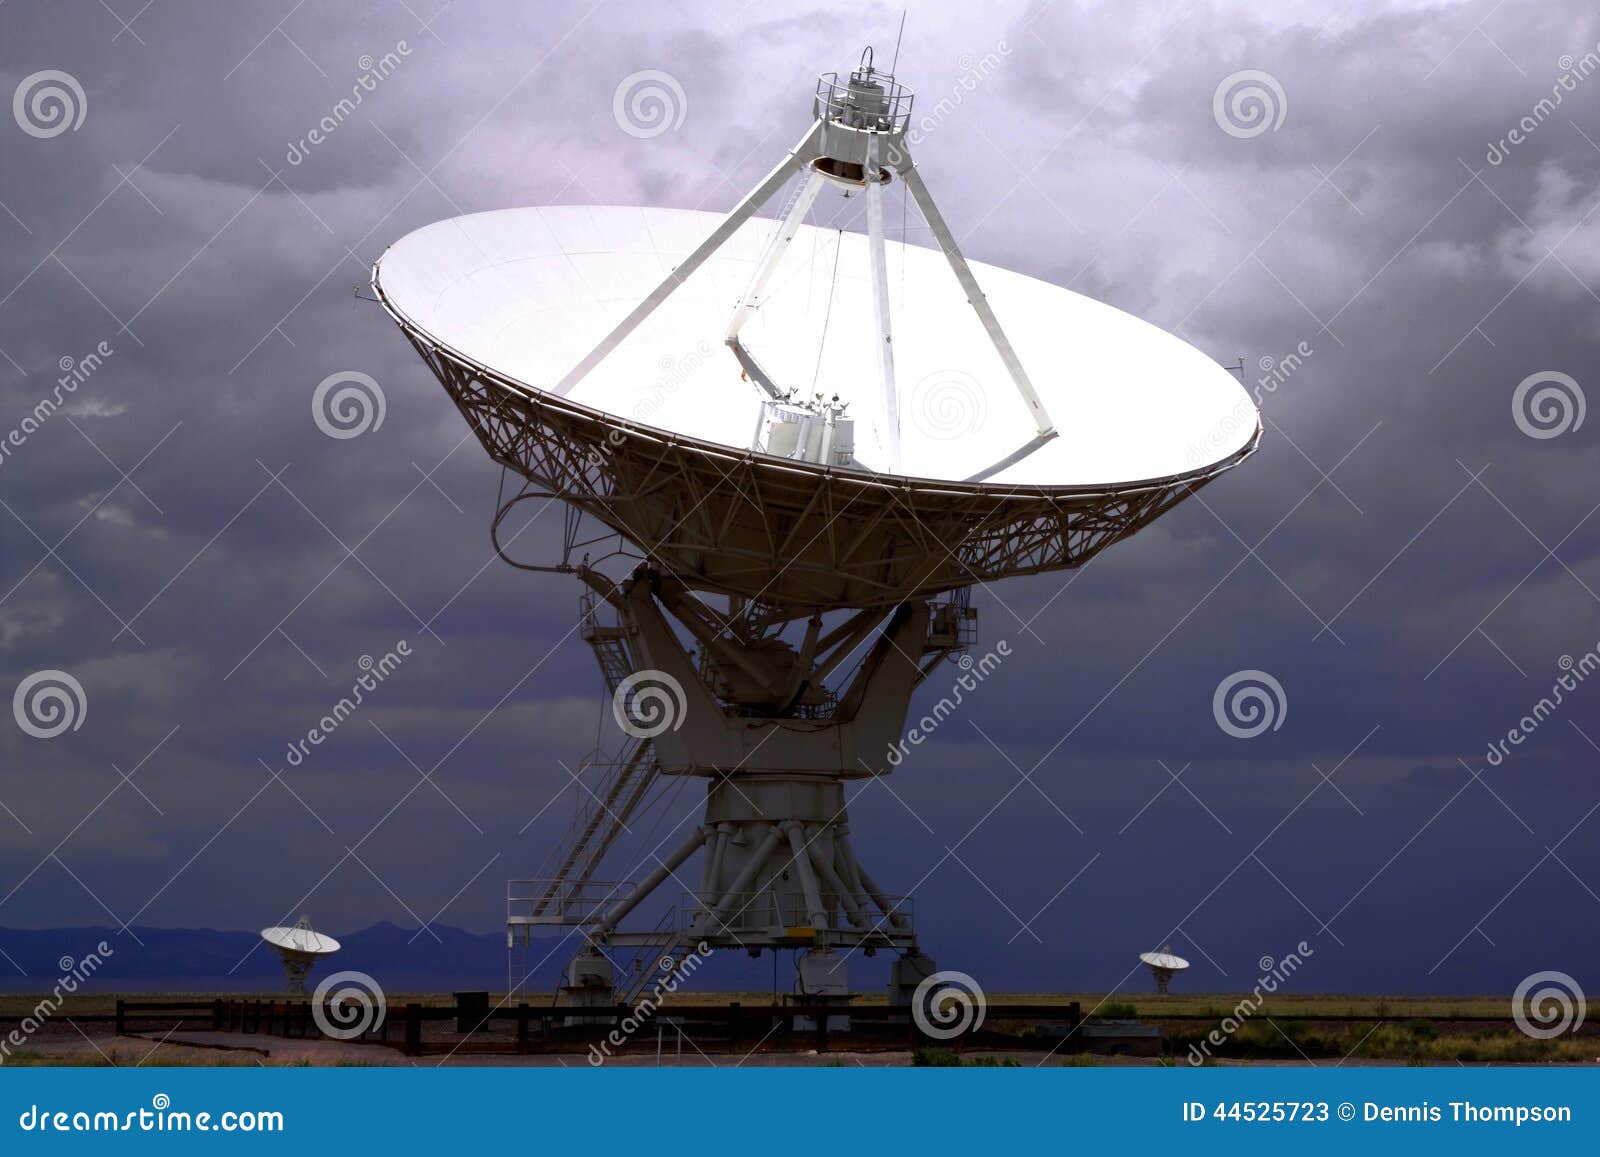 high tech electronic satellite dish radio telescope background